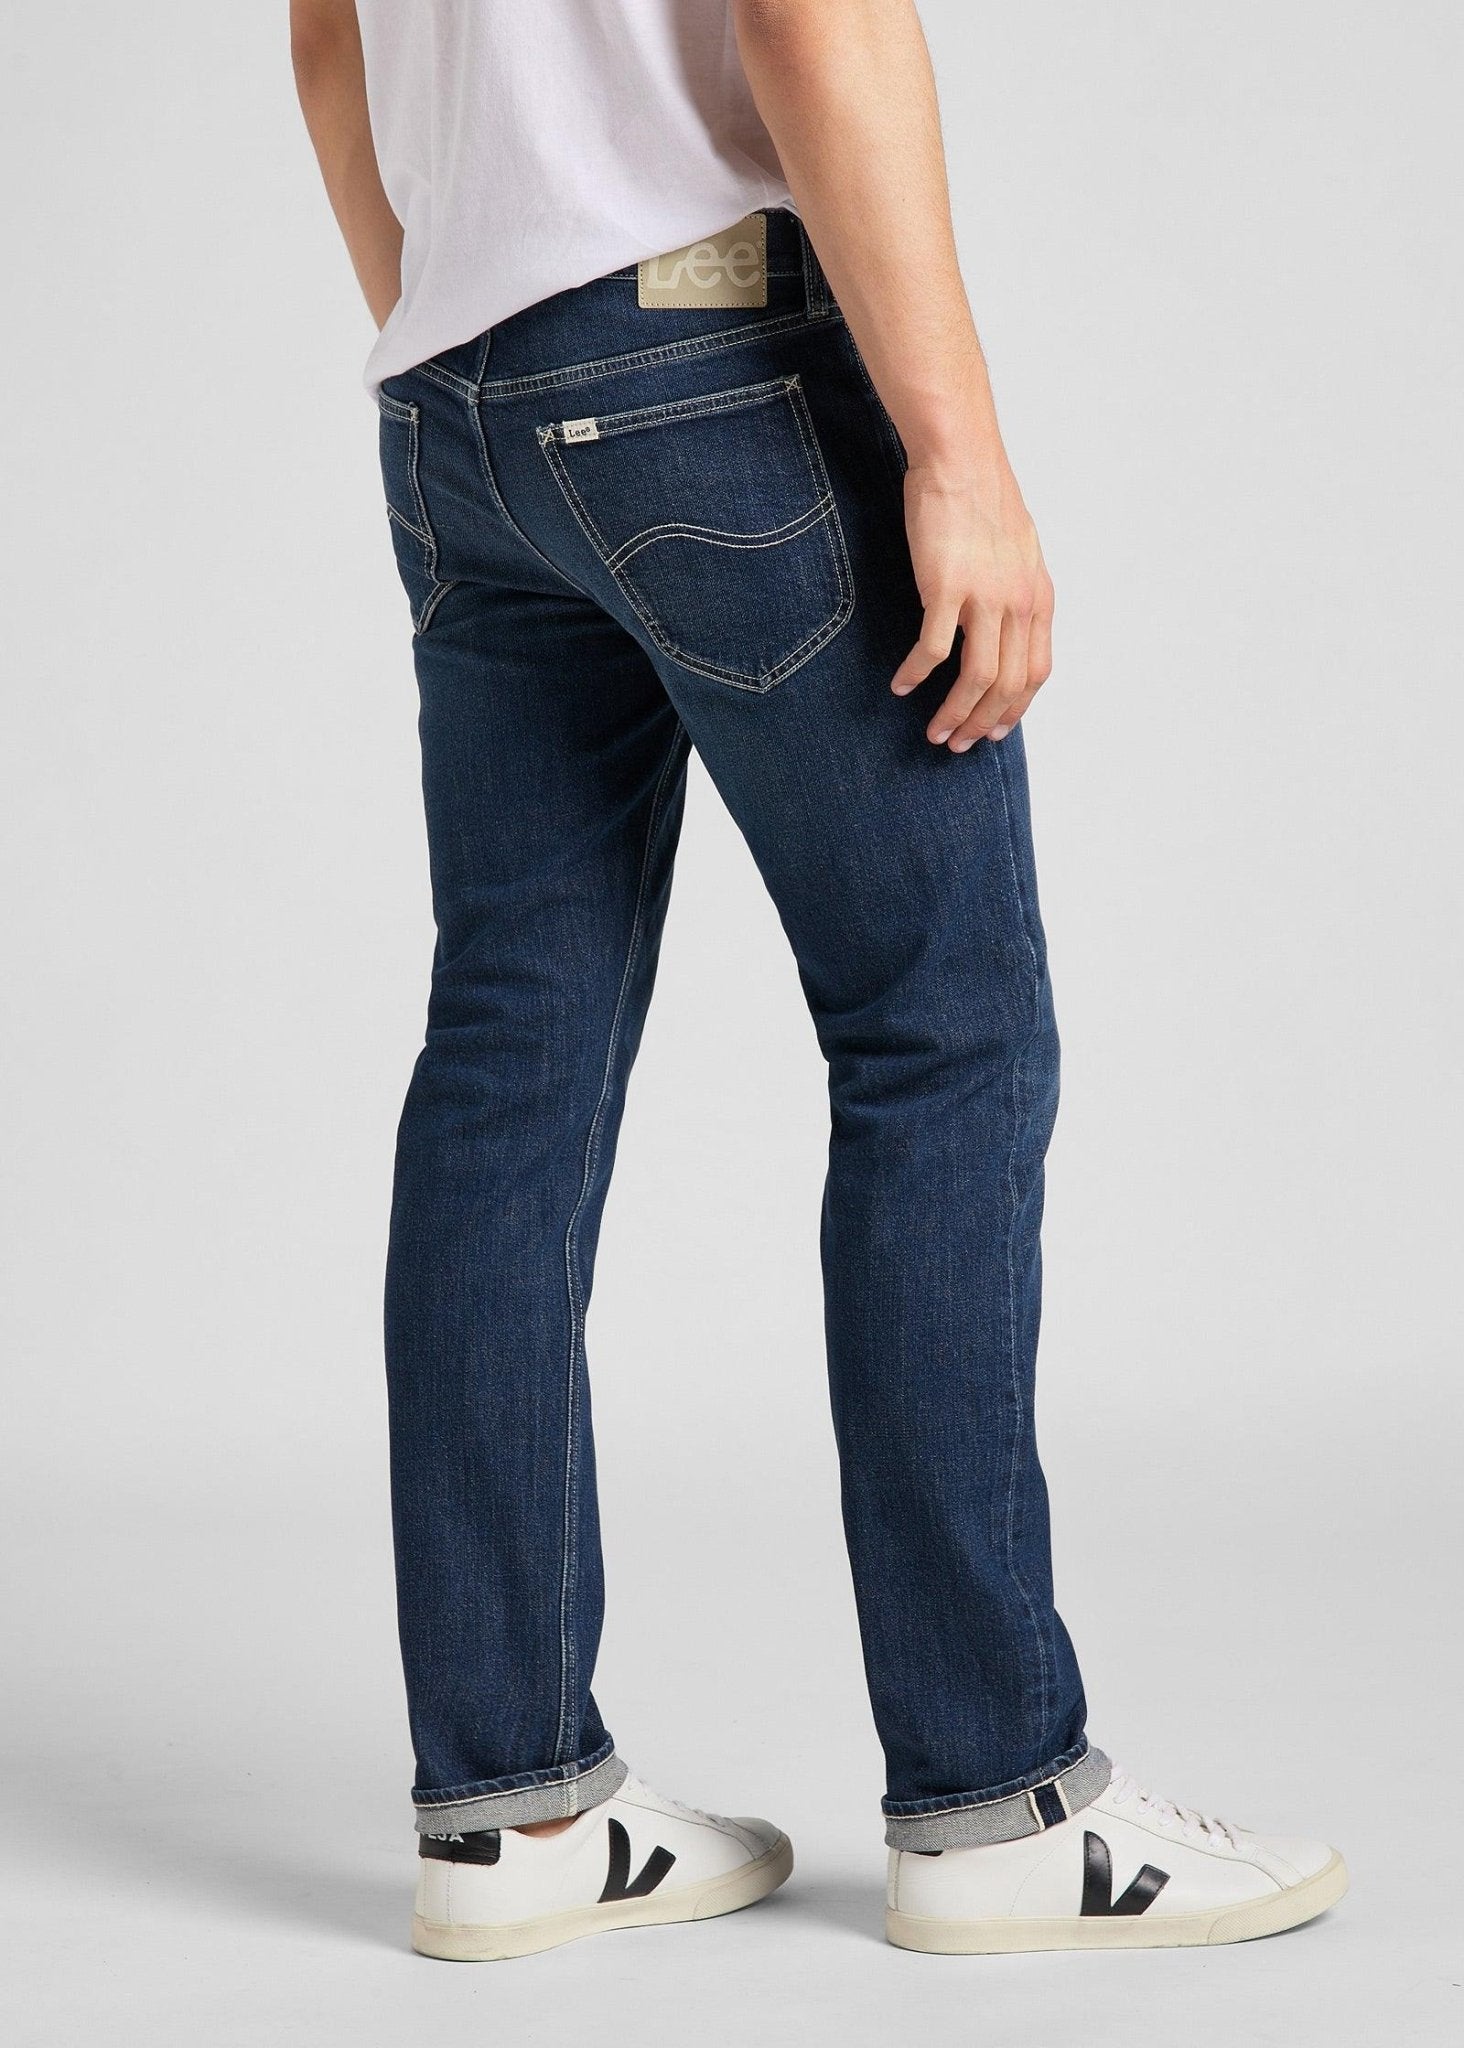 LEE - ג'ינס LUKE כחול כהה - MASHBIR//365